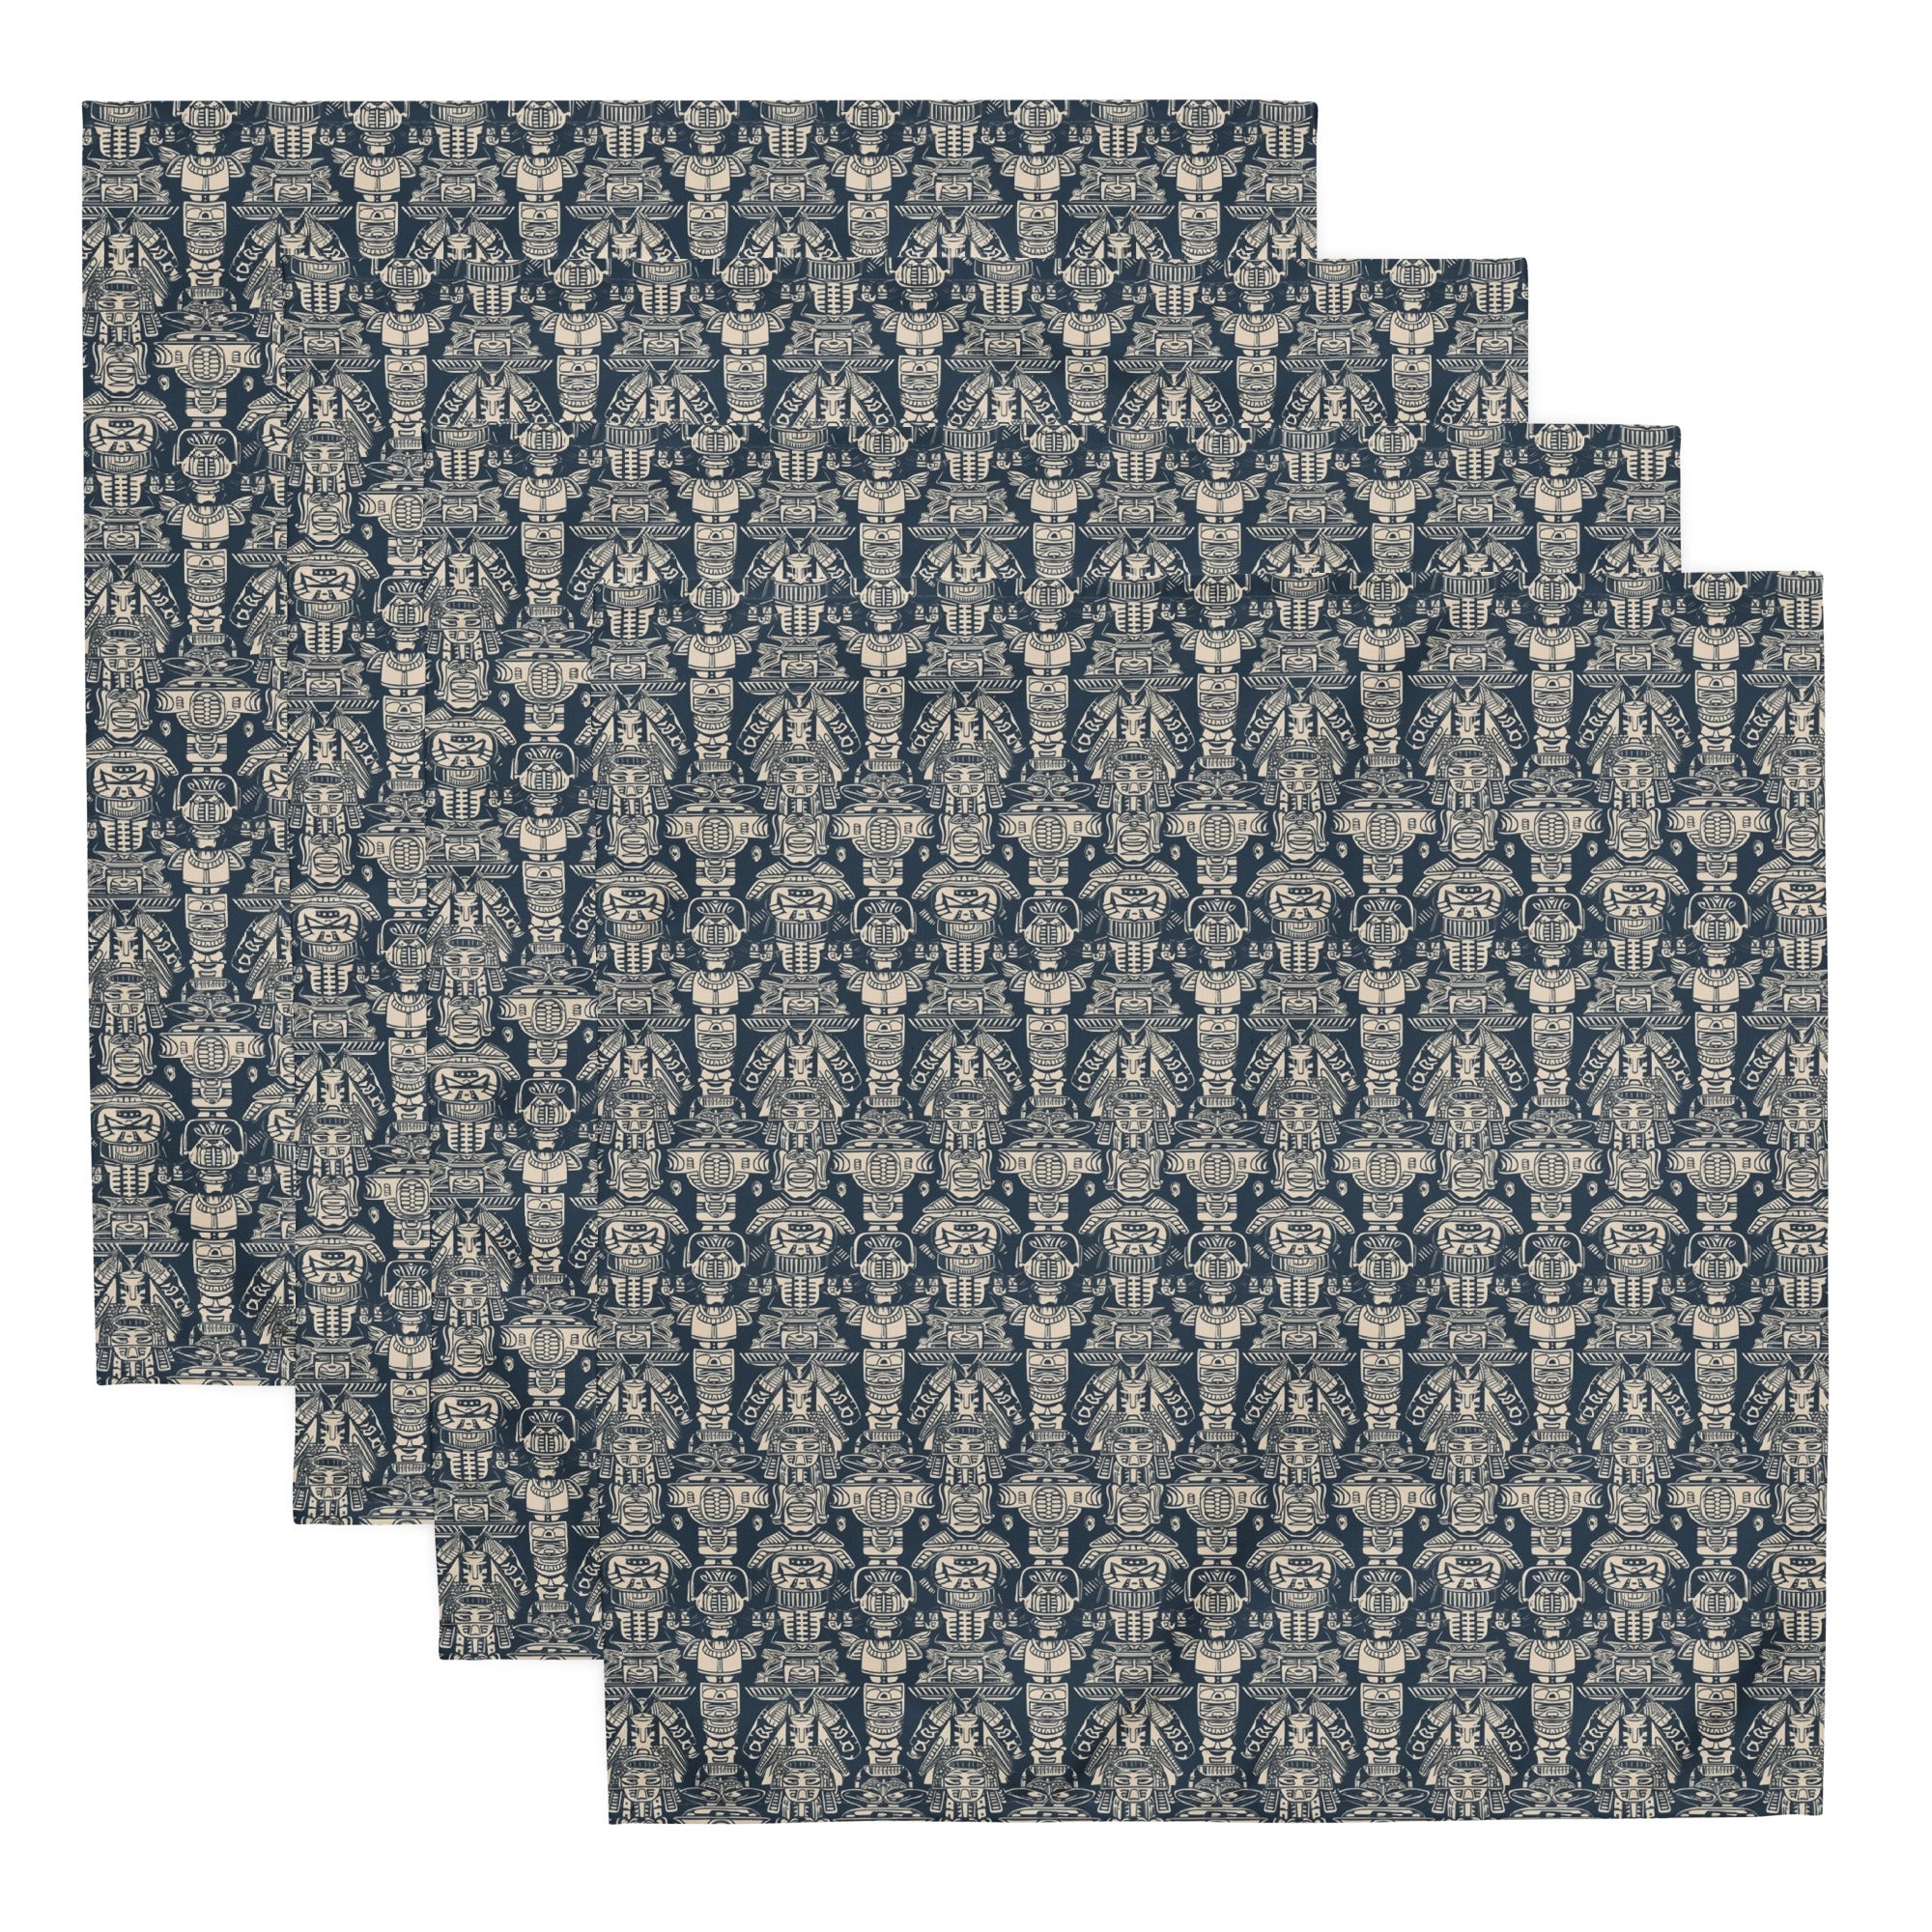 Aztec Blue Cloth napkin set